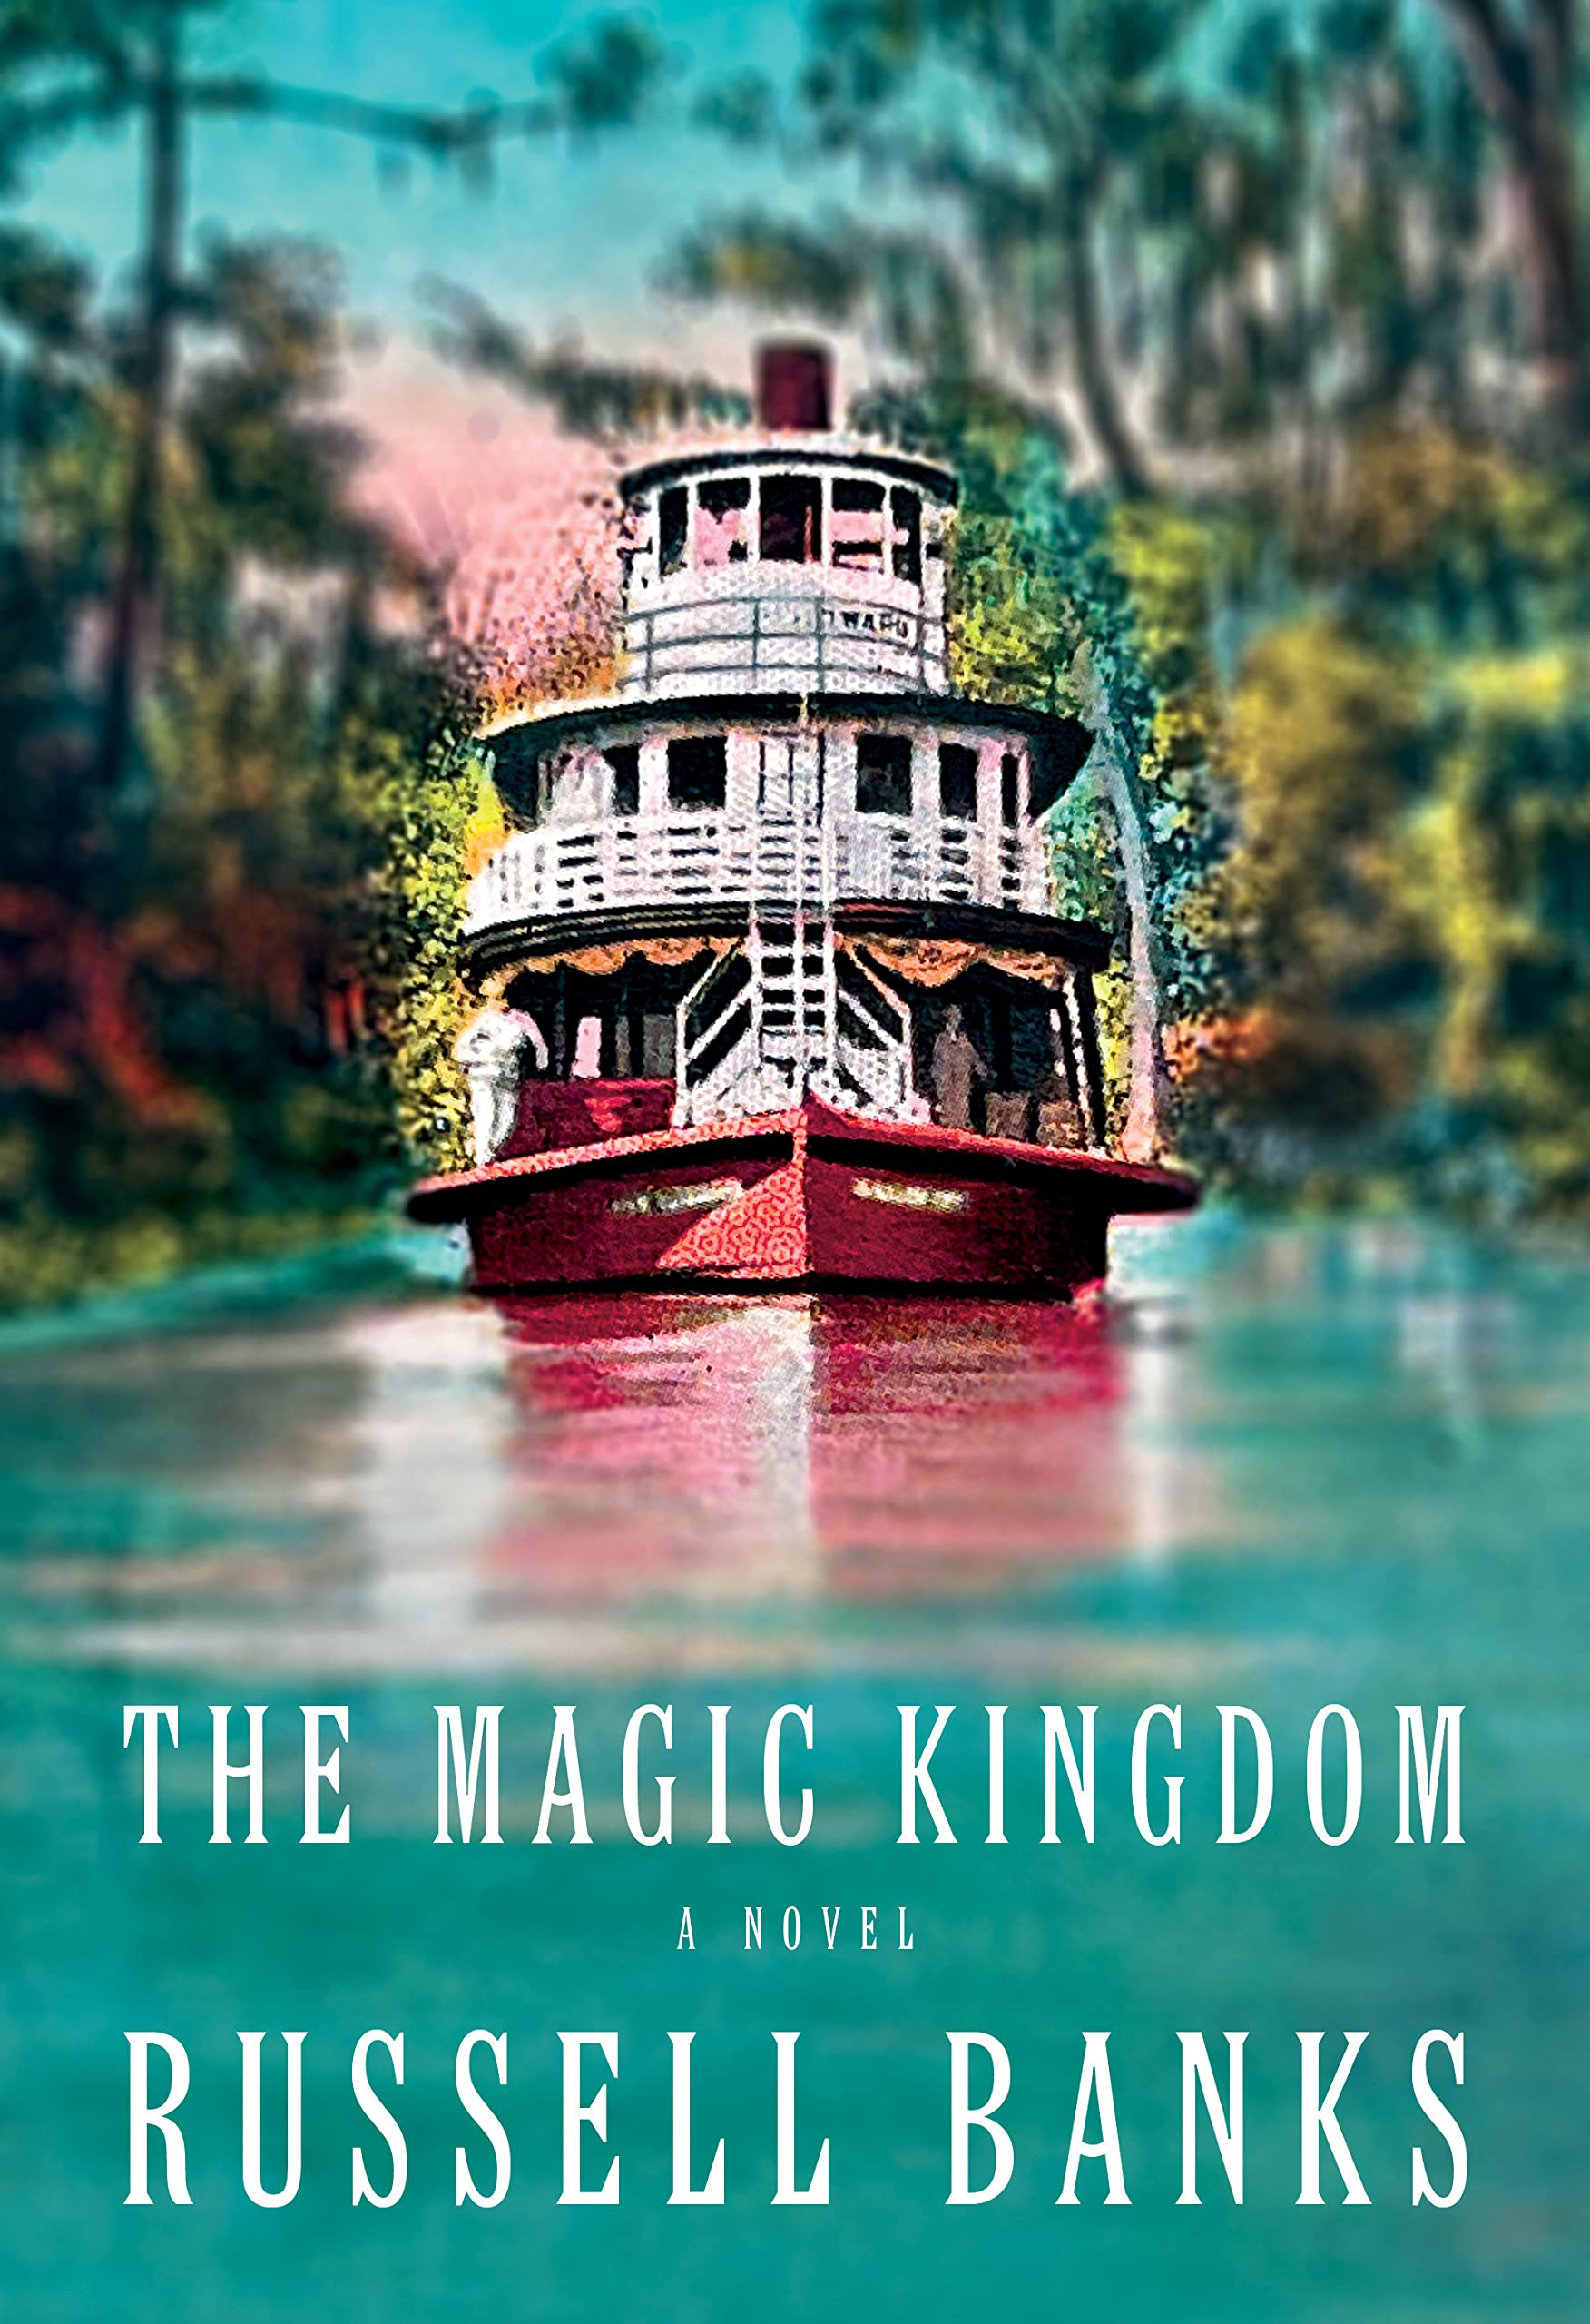 Image for "The Magic Kingdom"